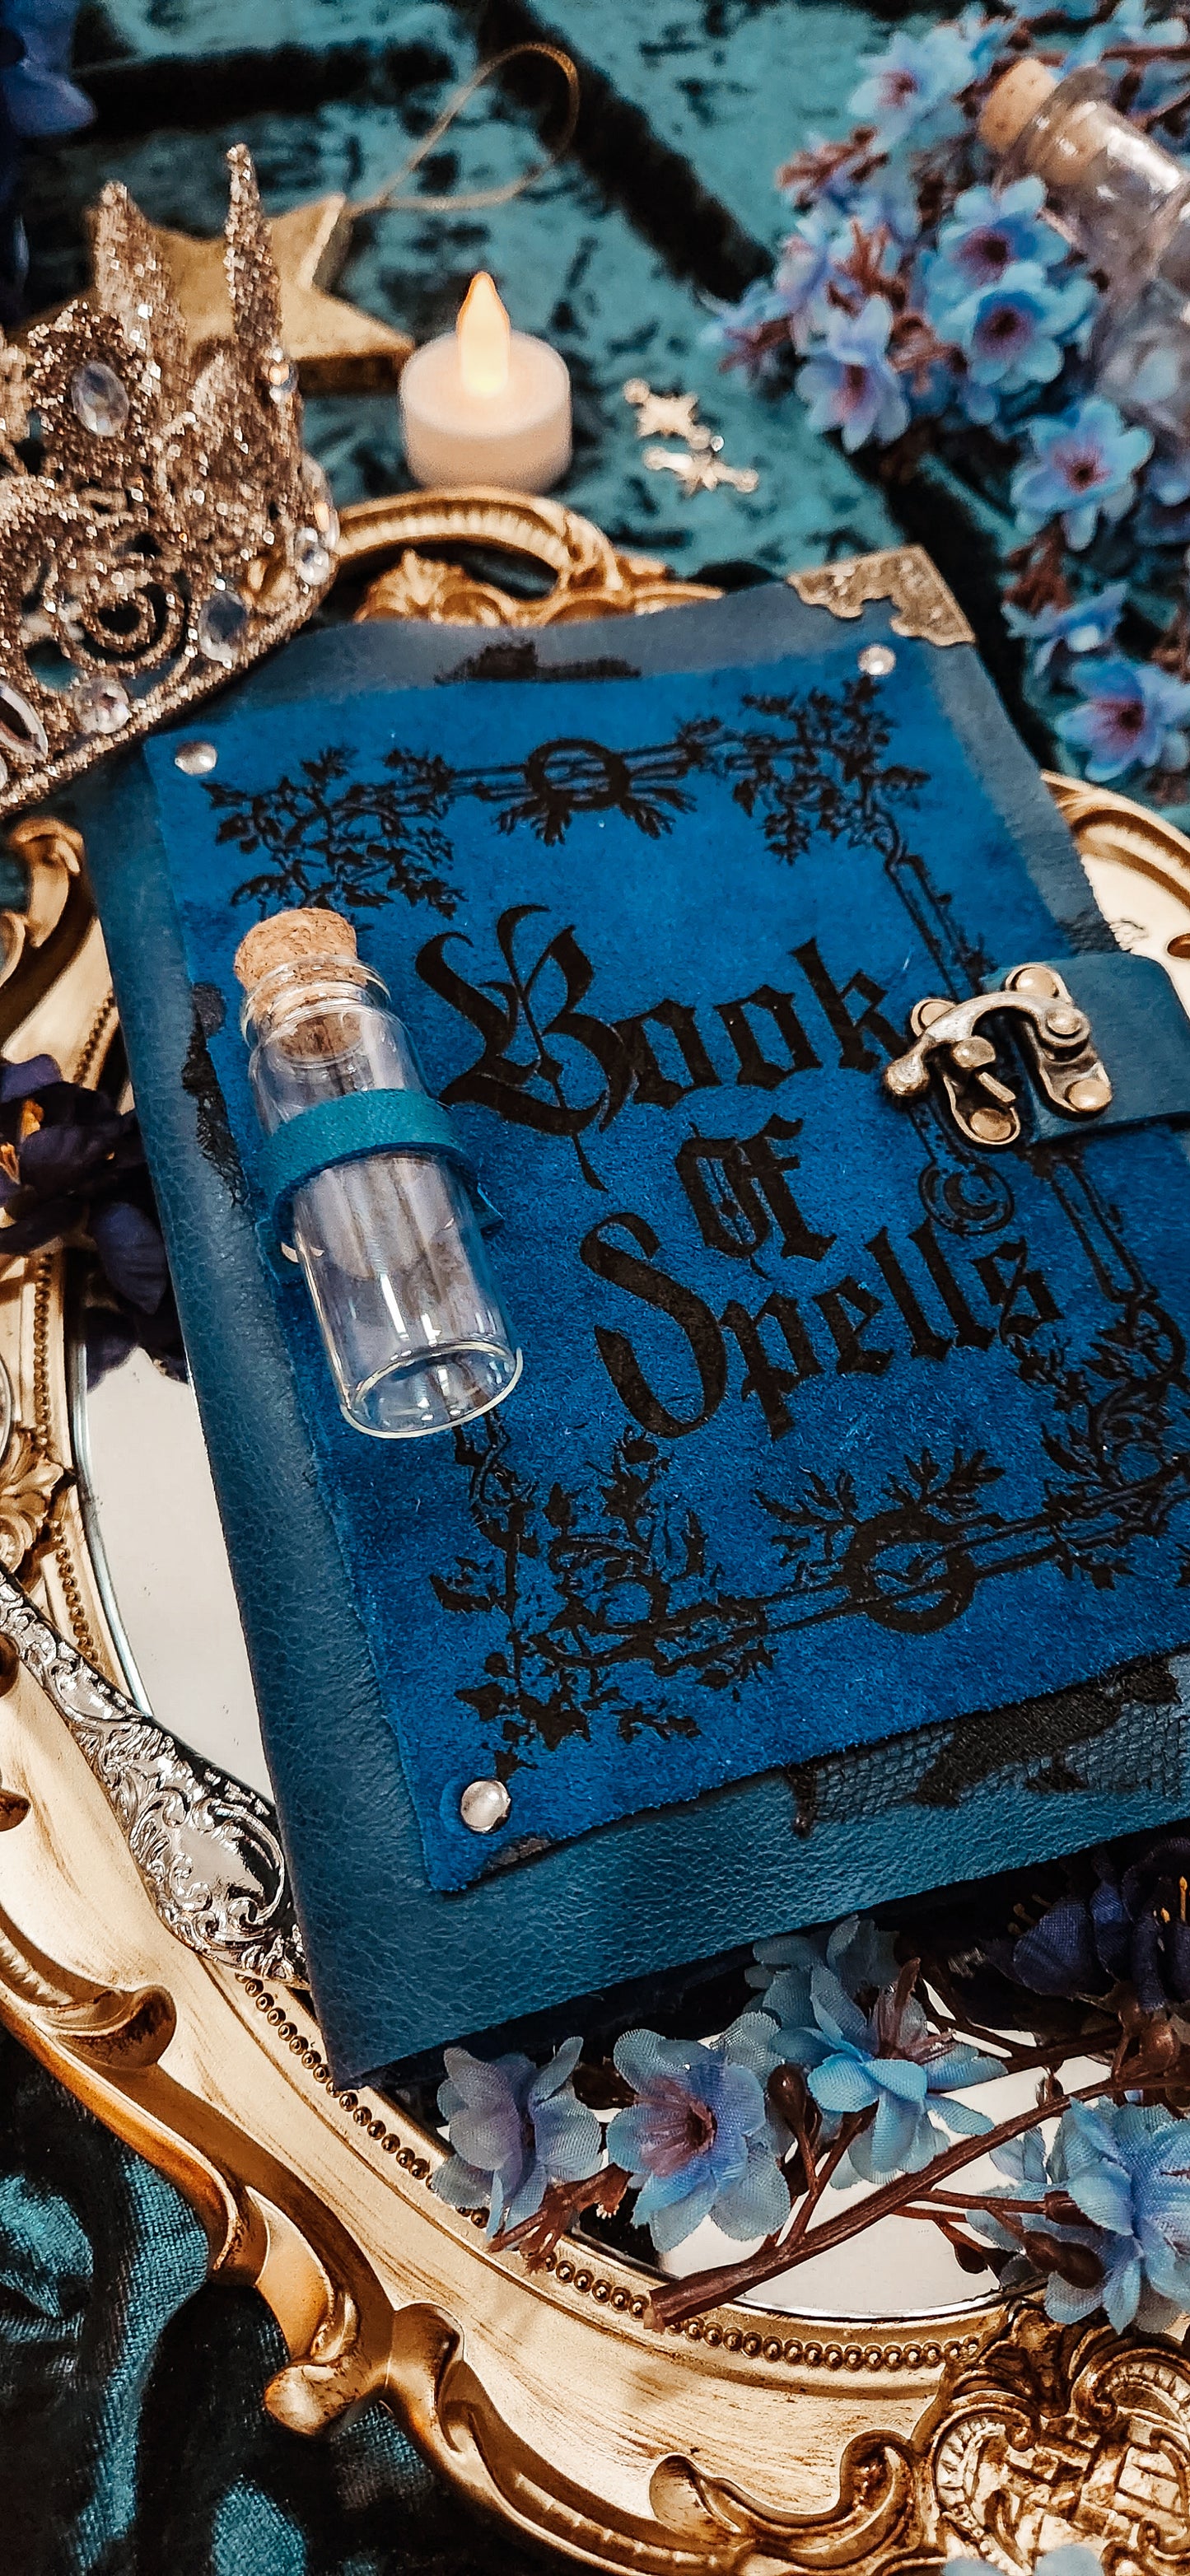 Book of spells leather journal & sketchbook